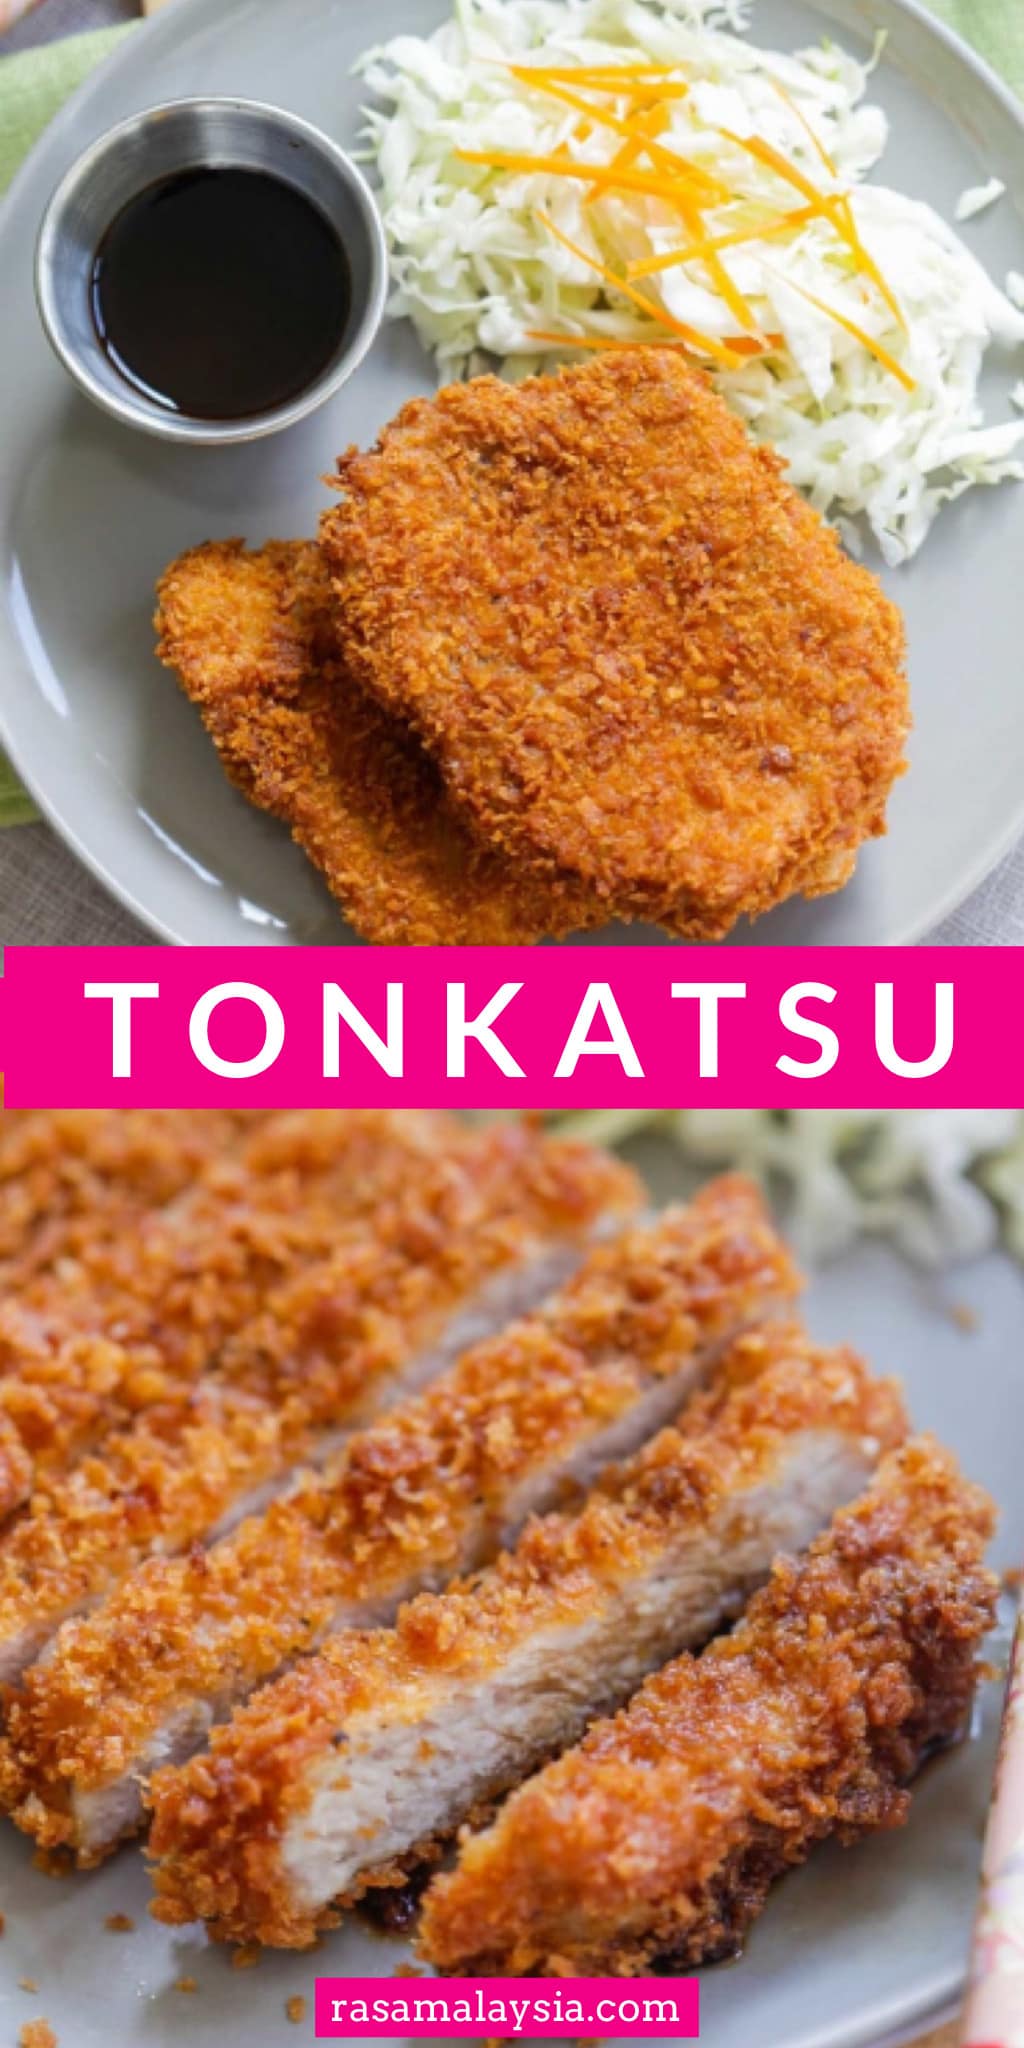 Tonkatsu is crispy and crunchy Japanese fried pork cutlet with panko bread crumbs. This homemade tonkatsu recipe is so easy and tastes like restaurants.